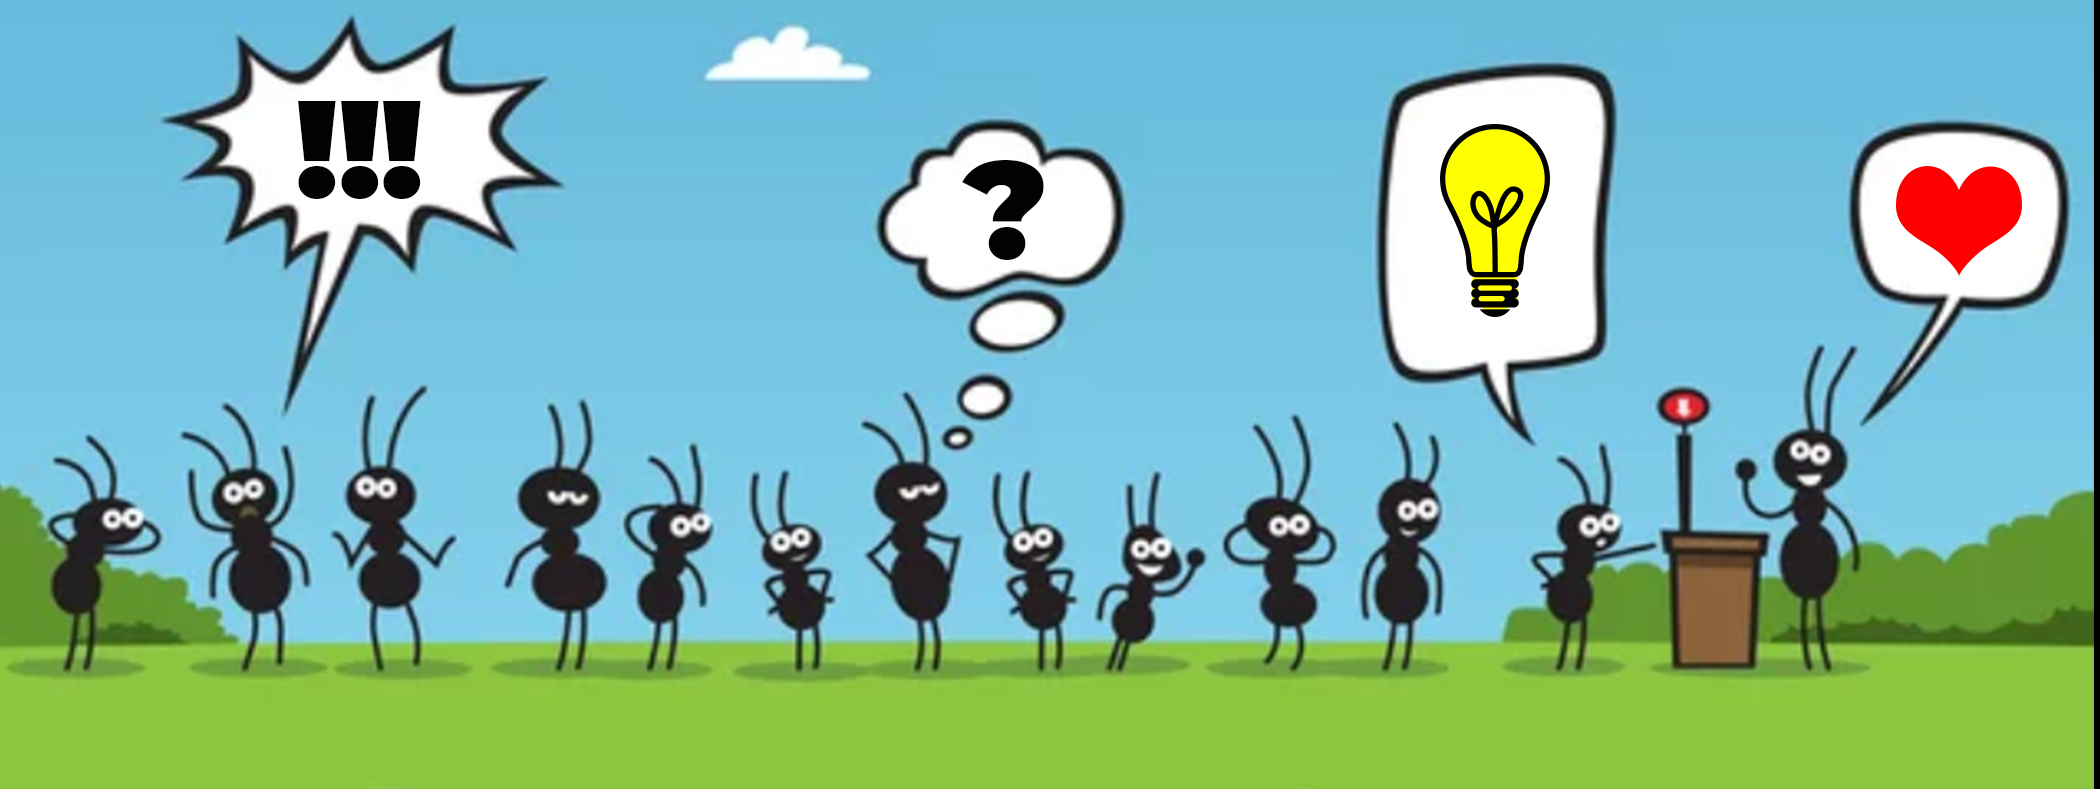 How Do Carpenter Ants Communicate